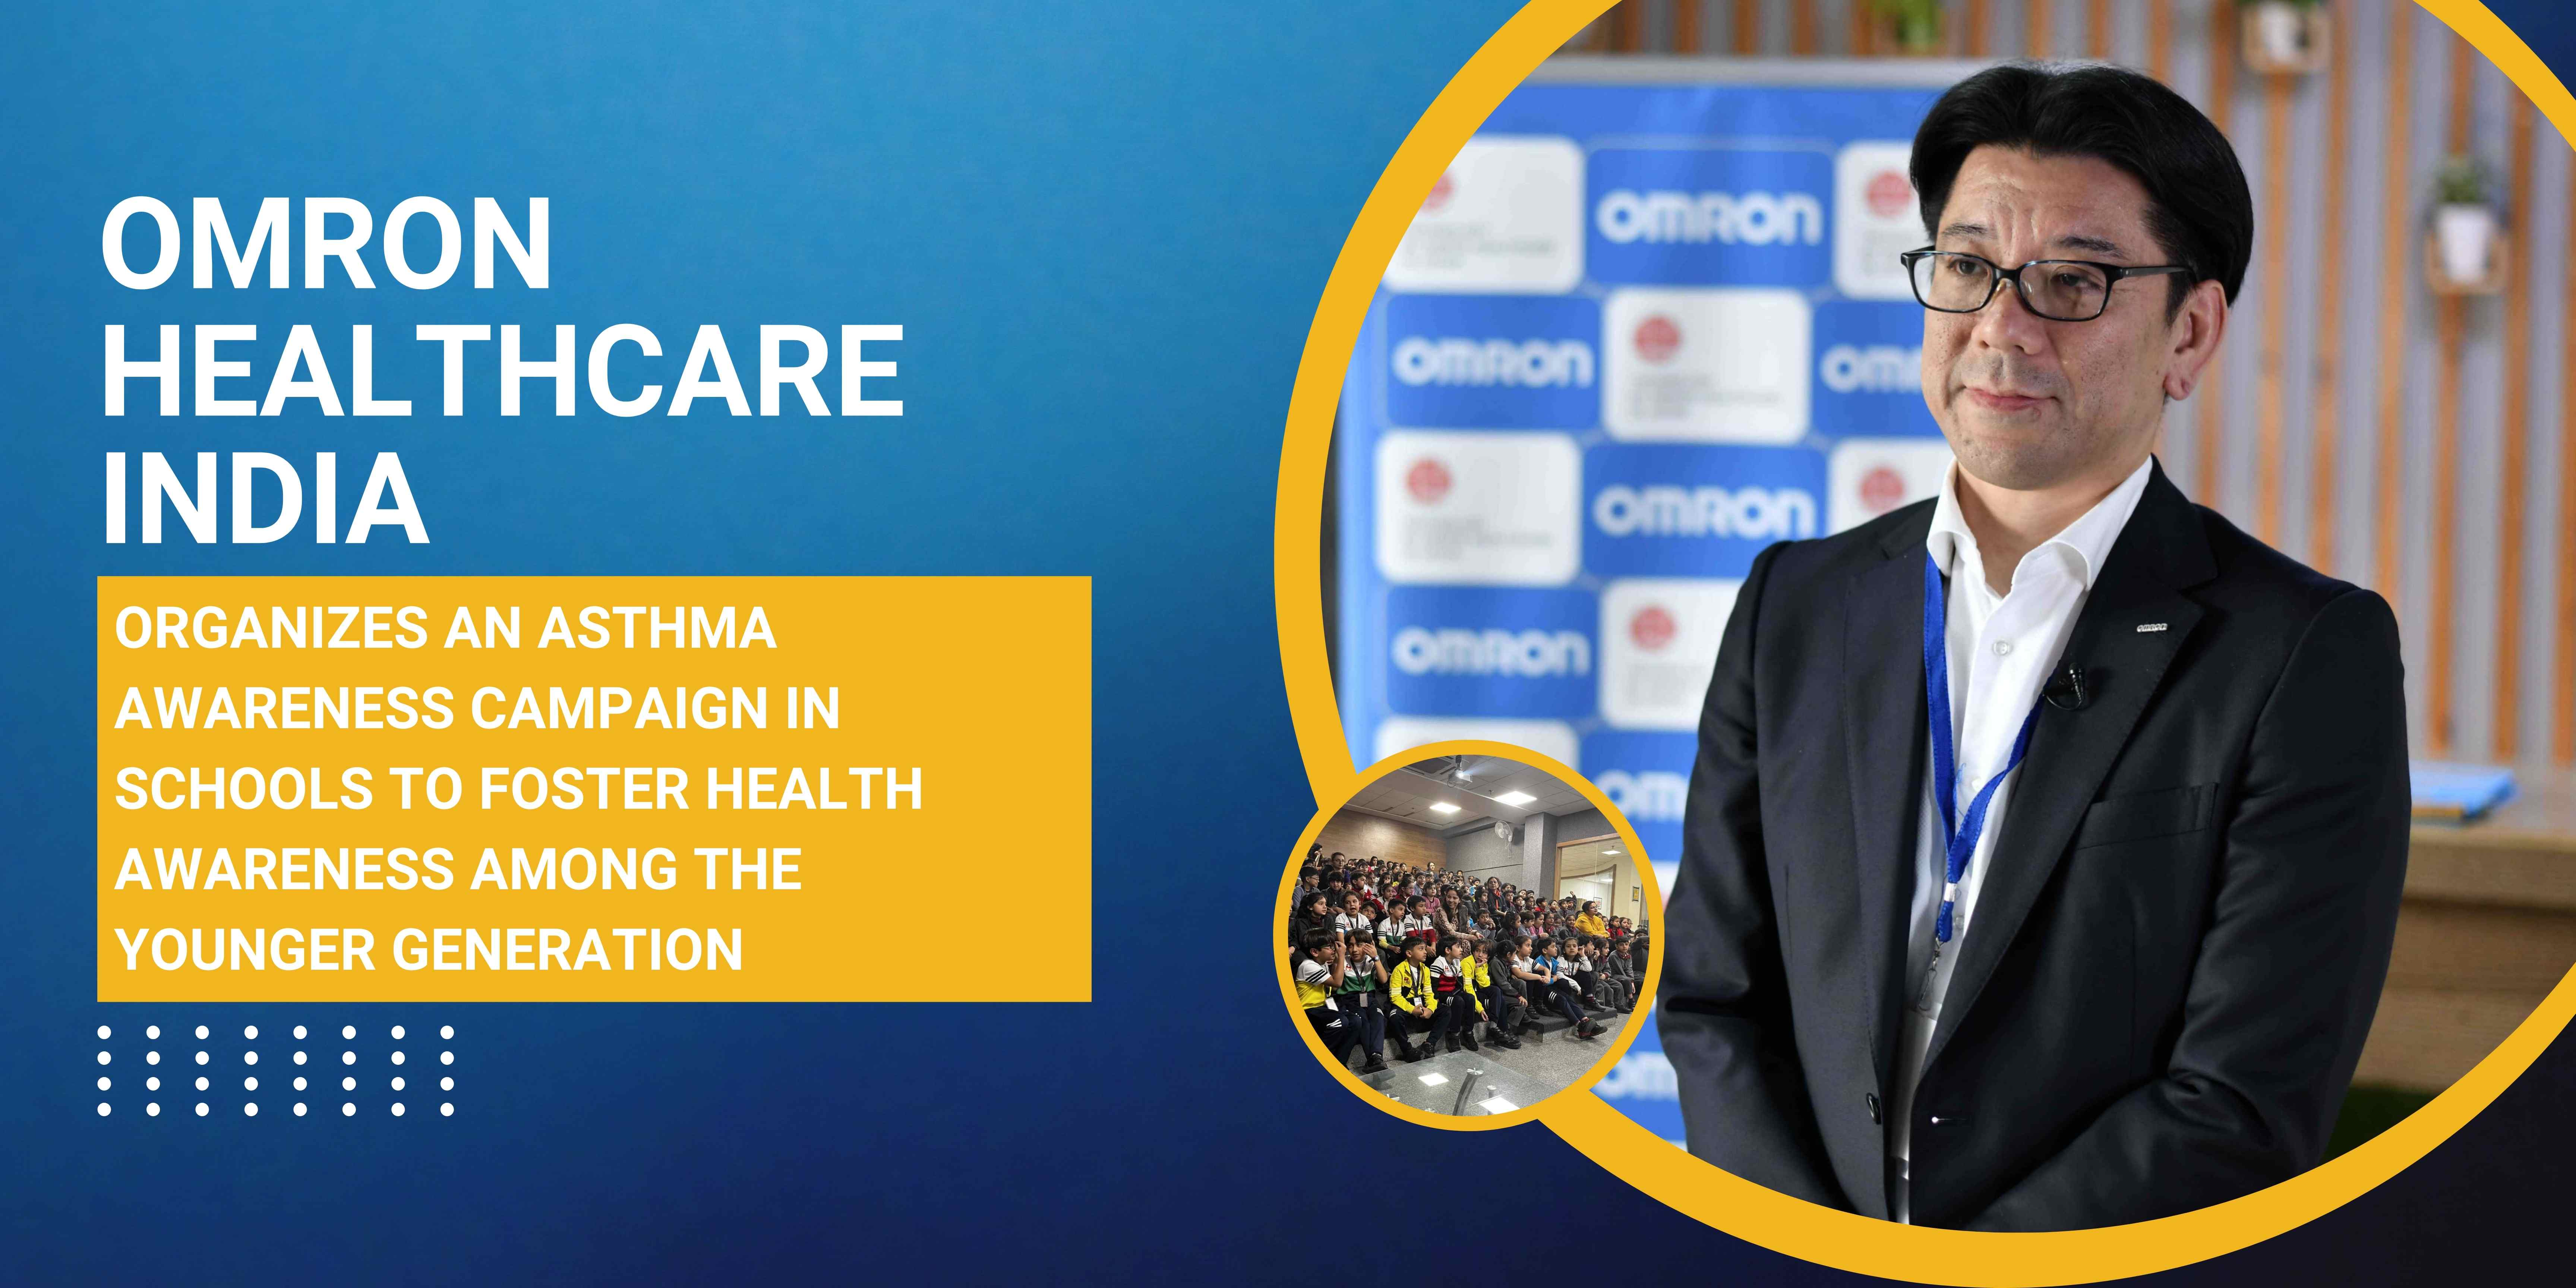 OMRON Healthcare India Inspires Healthier Futures at Manav Rachna International School, Delhi NCR